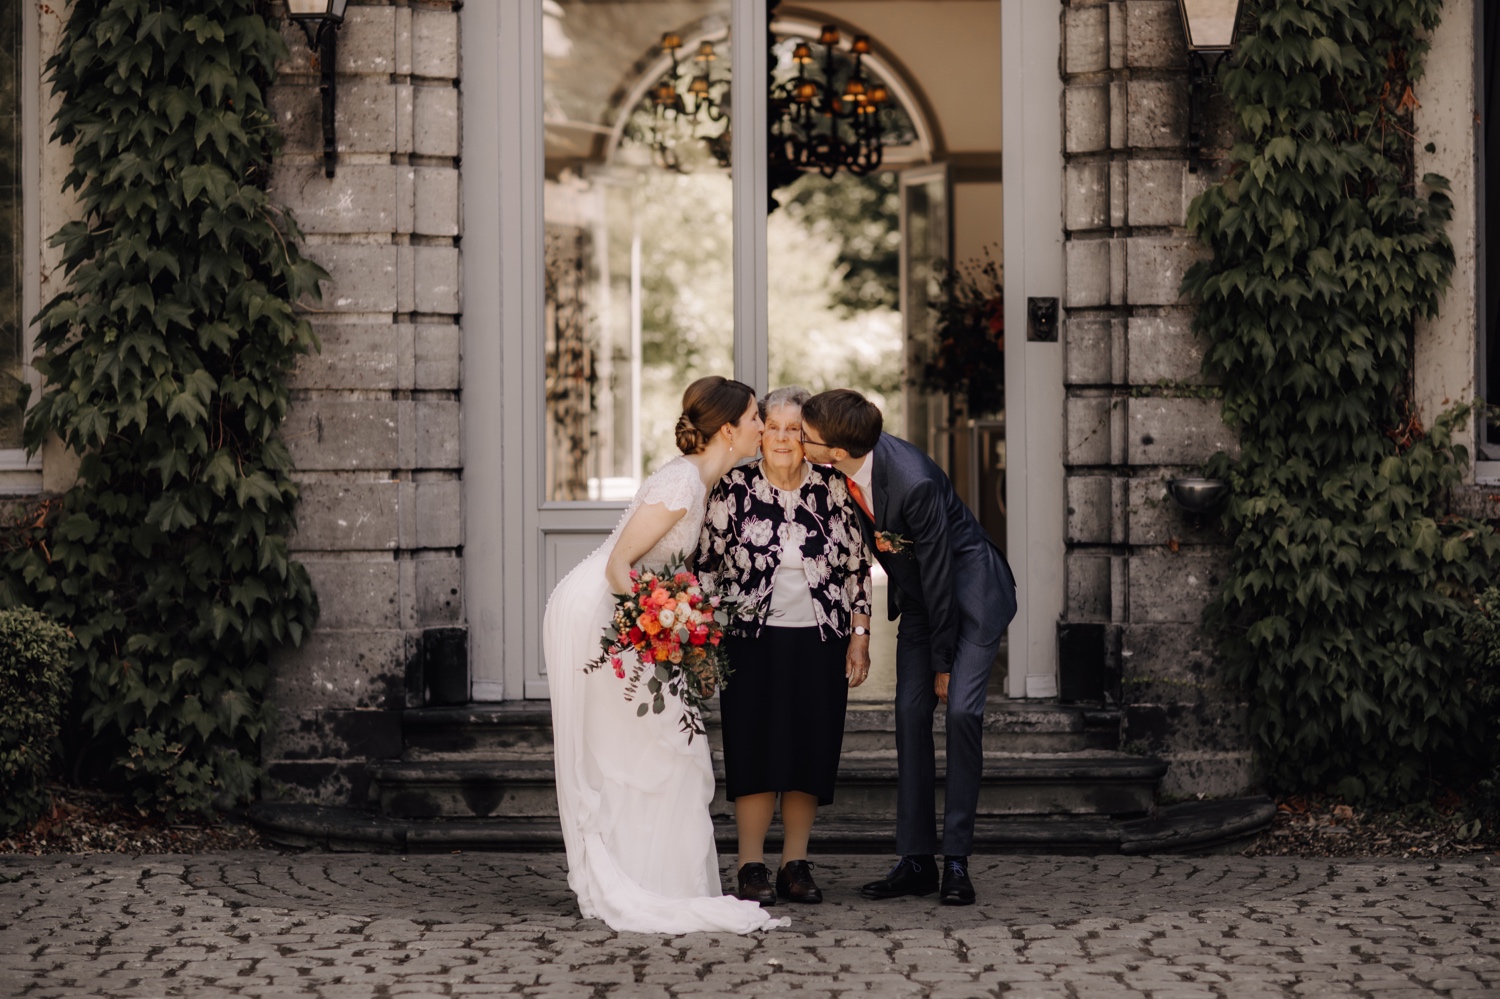 Huwelijksfotograaf Limburg - bruidspaar kust oma op wang